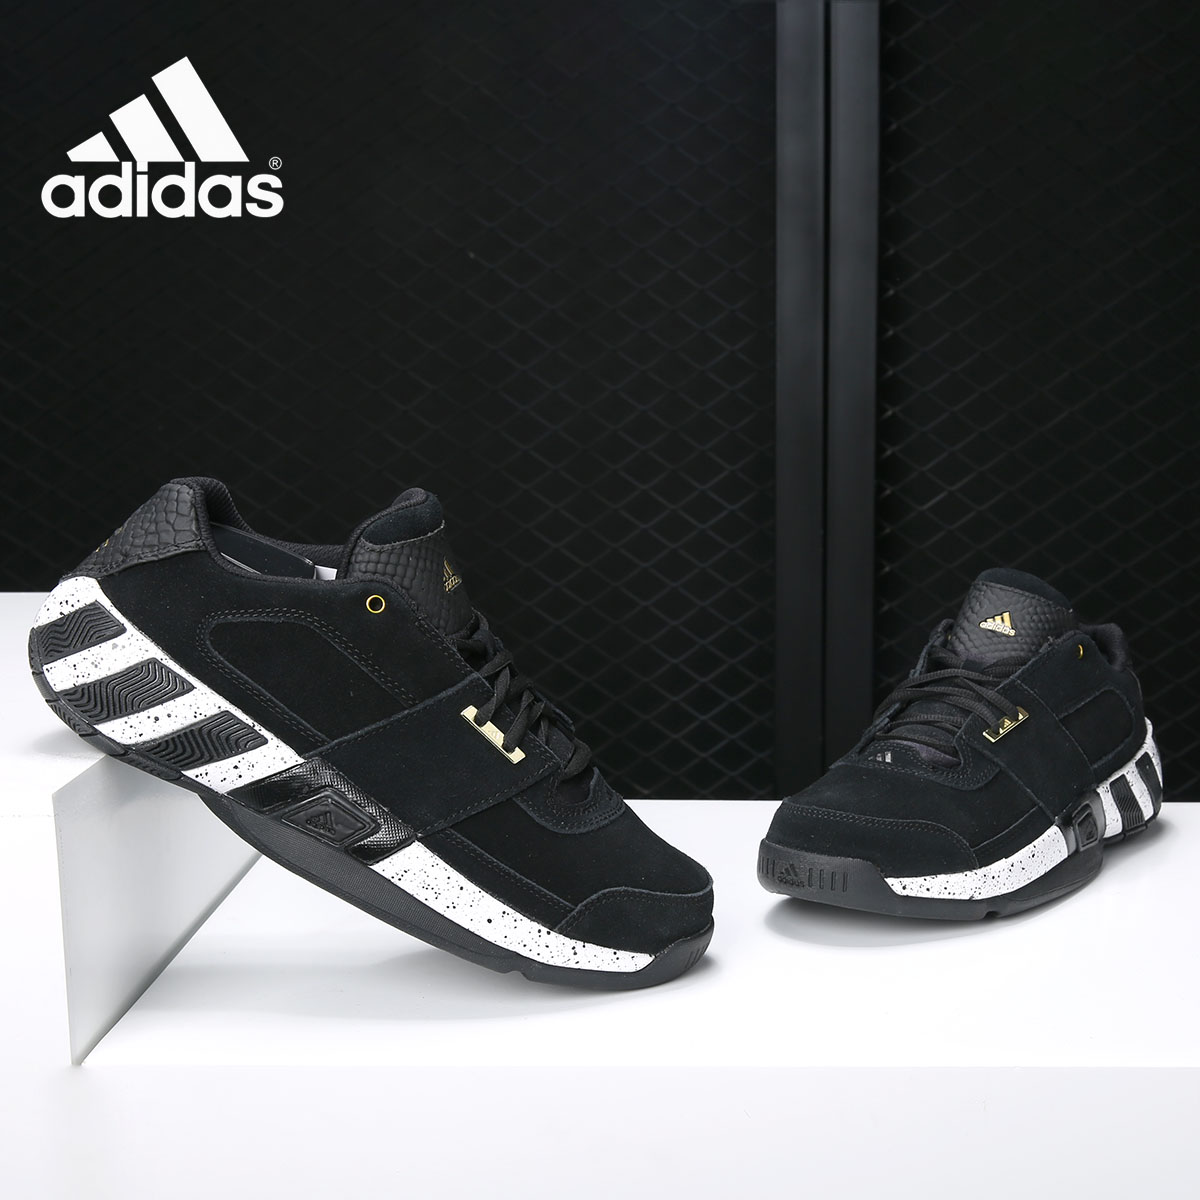 Adidas/阿迪达斯正品 Regulate 阿里纳斯战靴休闲篮球鞋 CG5278